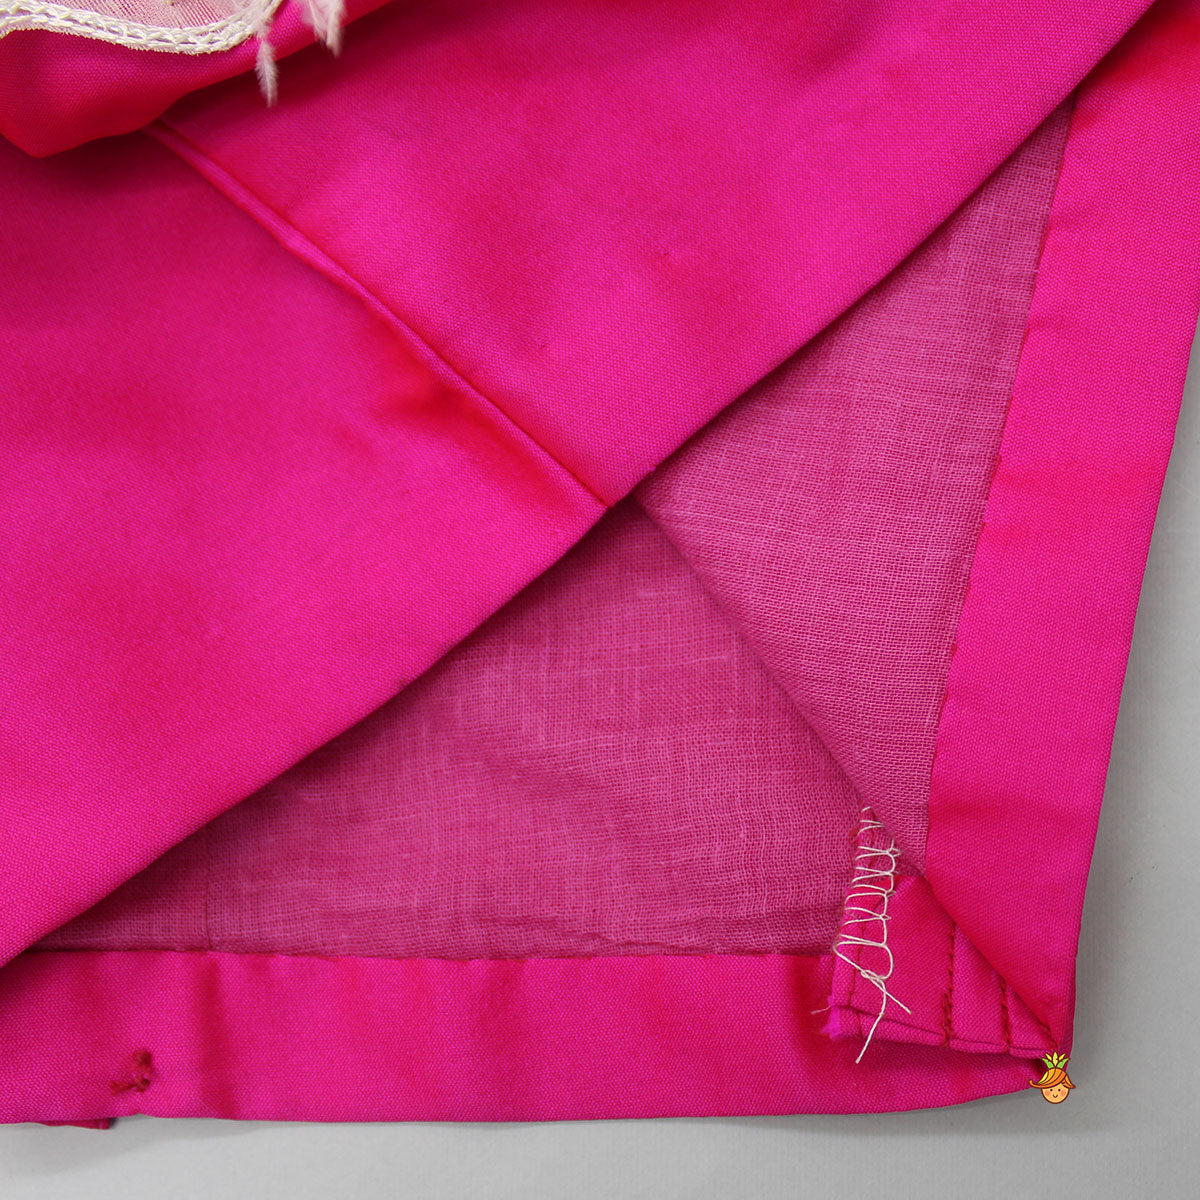 Stylish One-Shoulder Pink Top And Lehenga